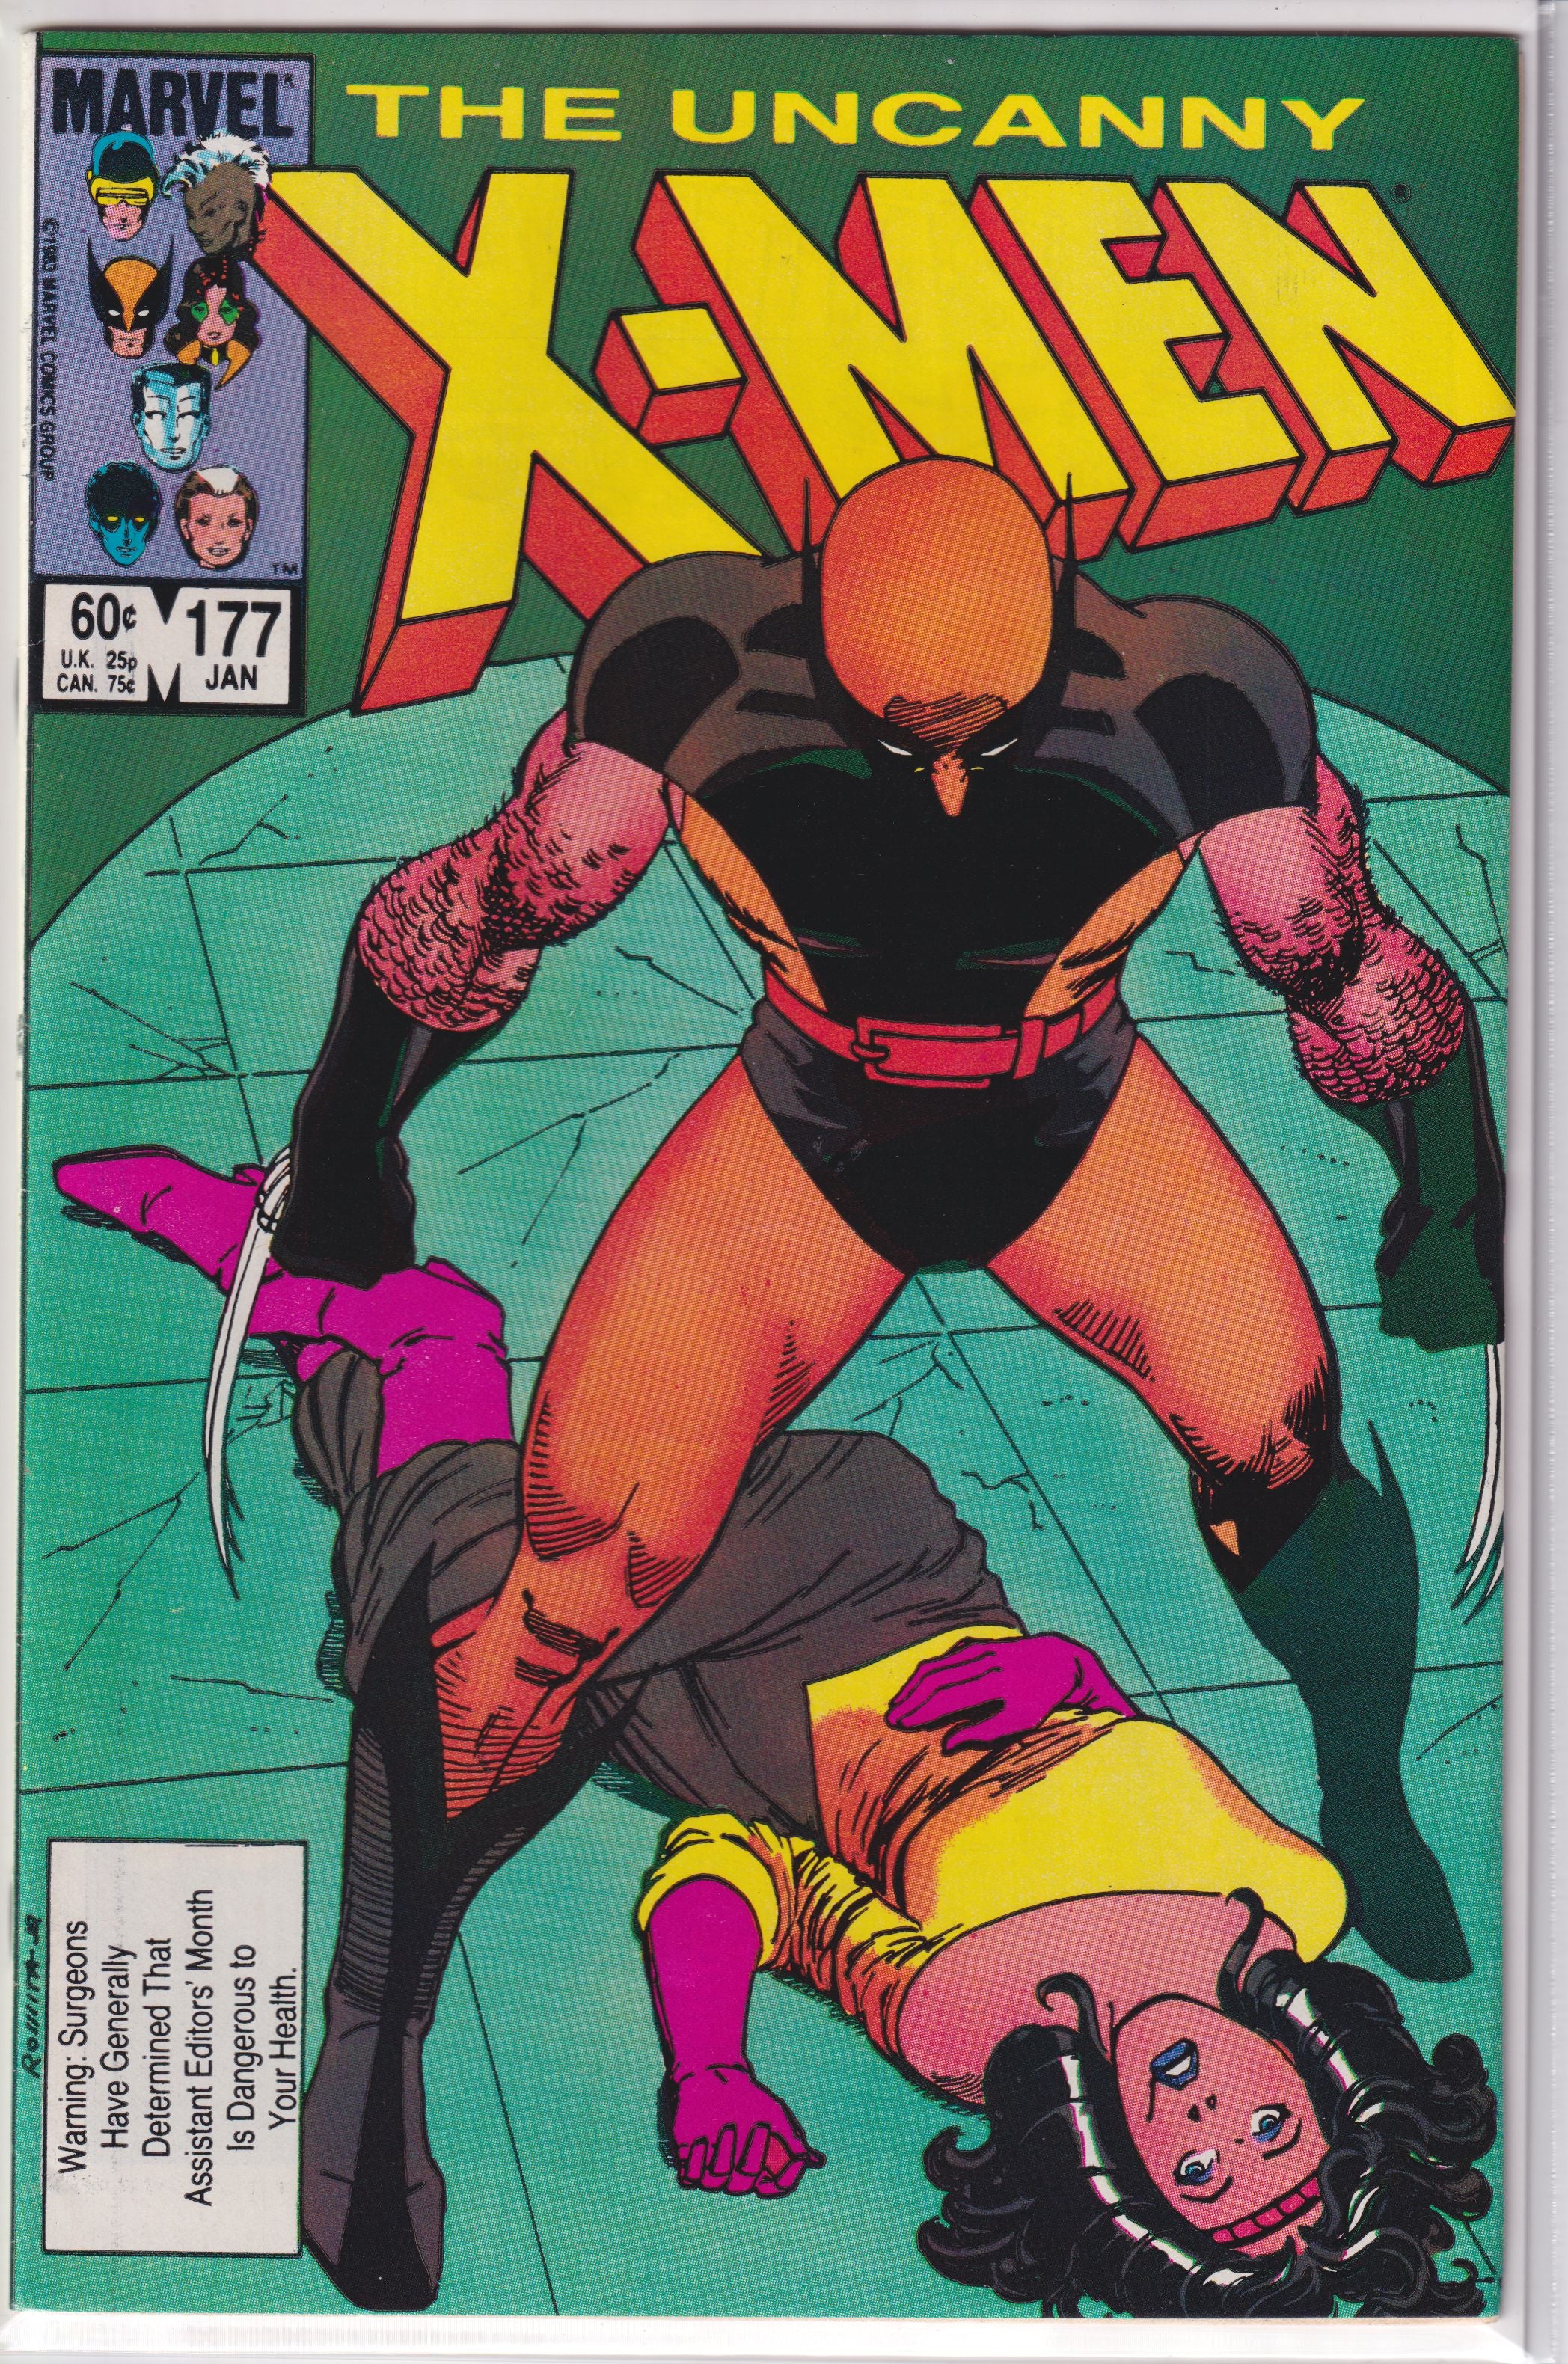 UNCANNY X-MEN (1981) #177 FN/VF